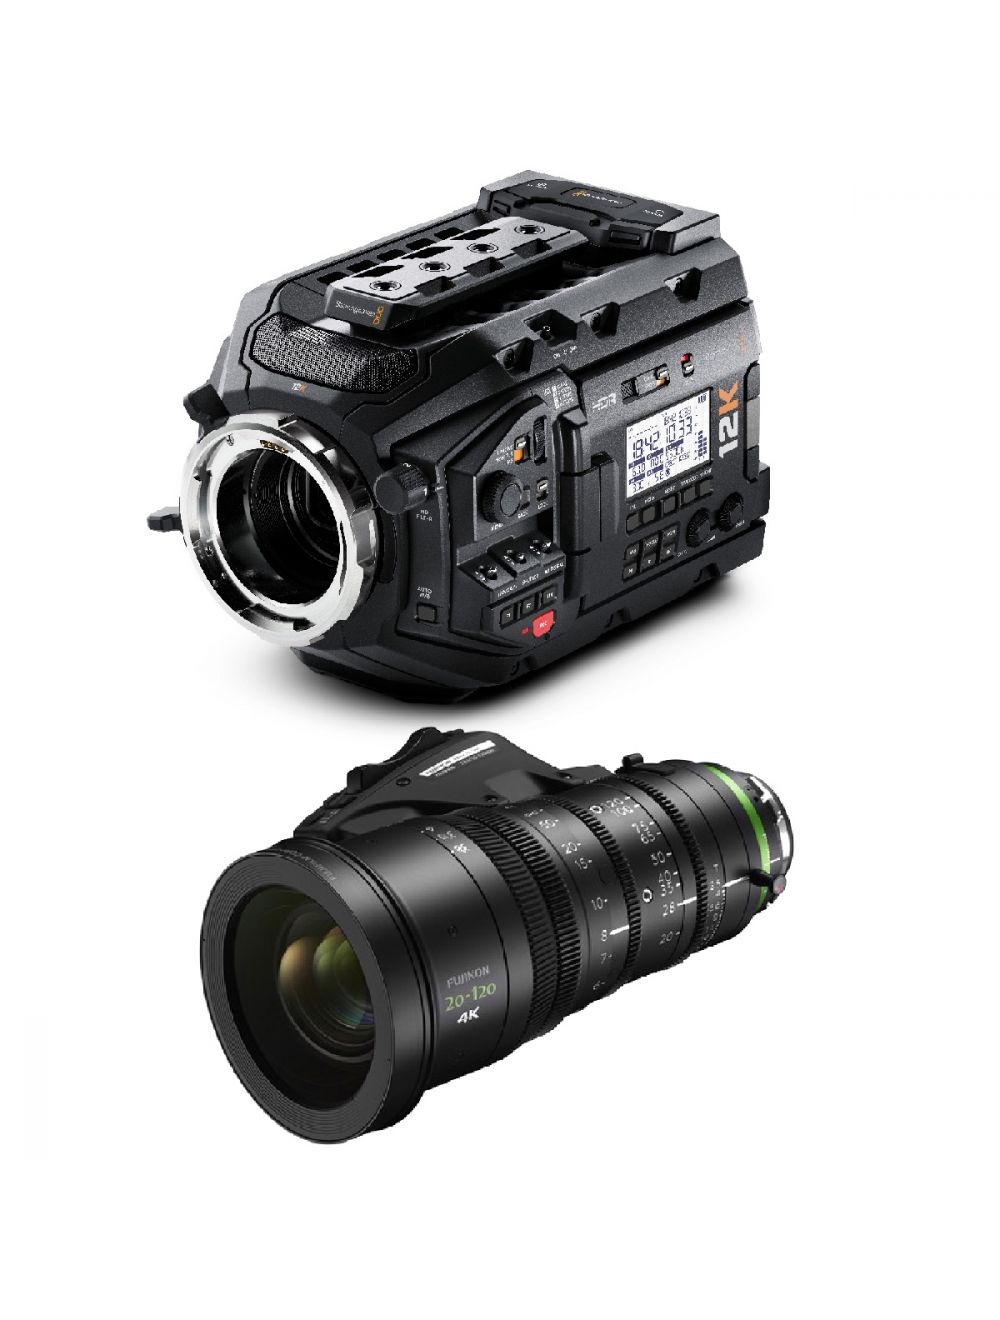 Blackmagic Adds Vertical Video Pocket Cinema Cameras